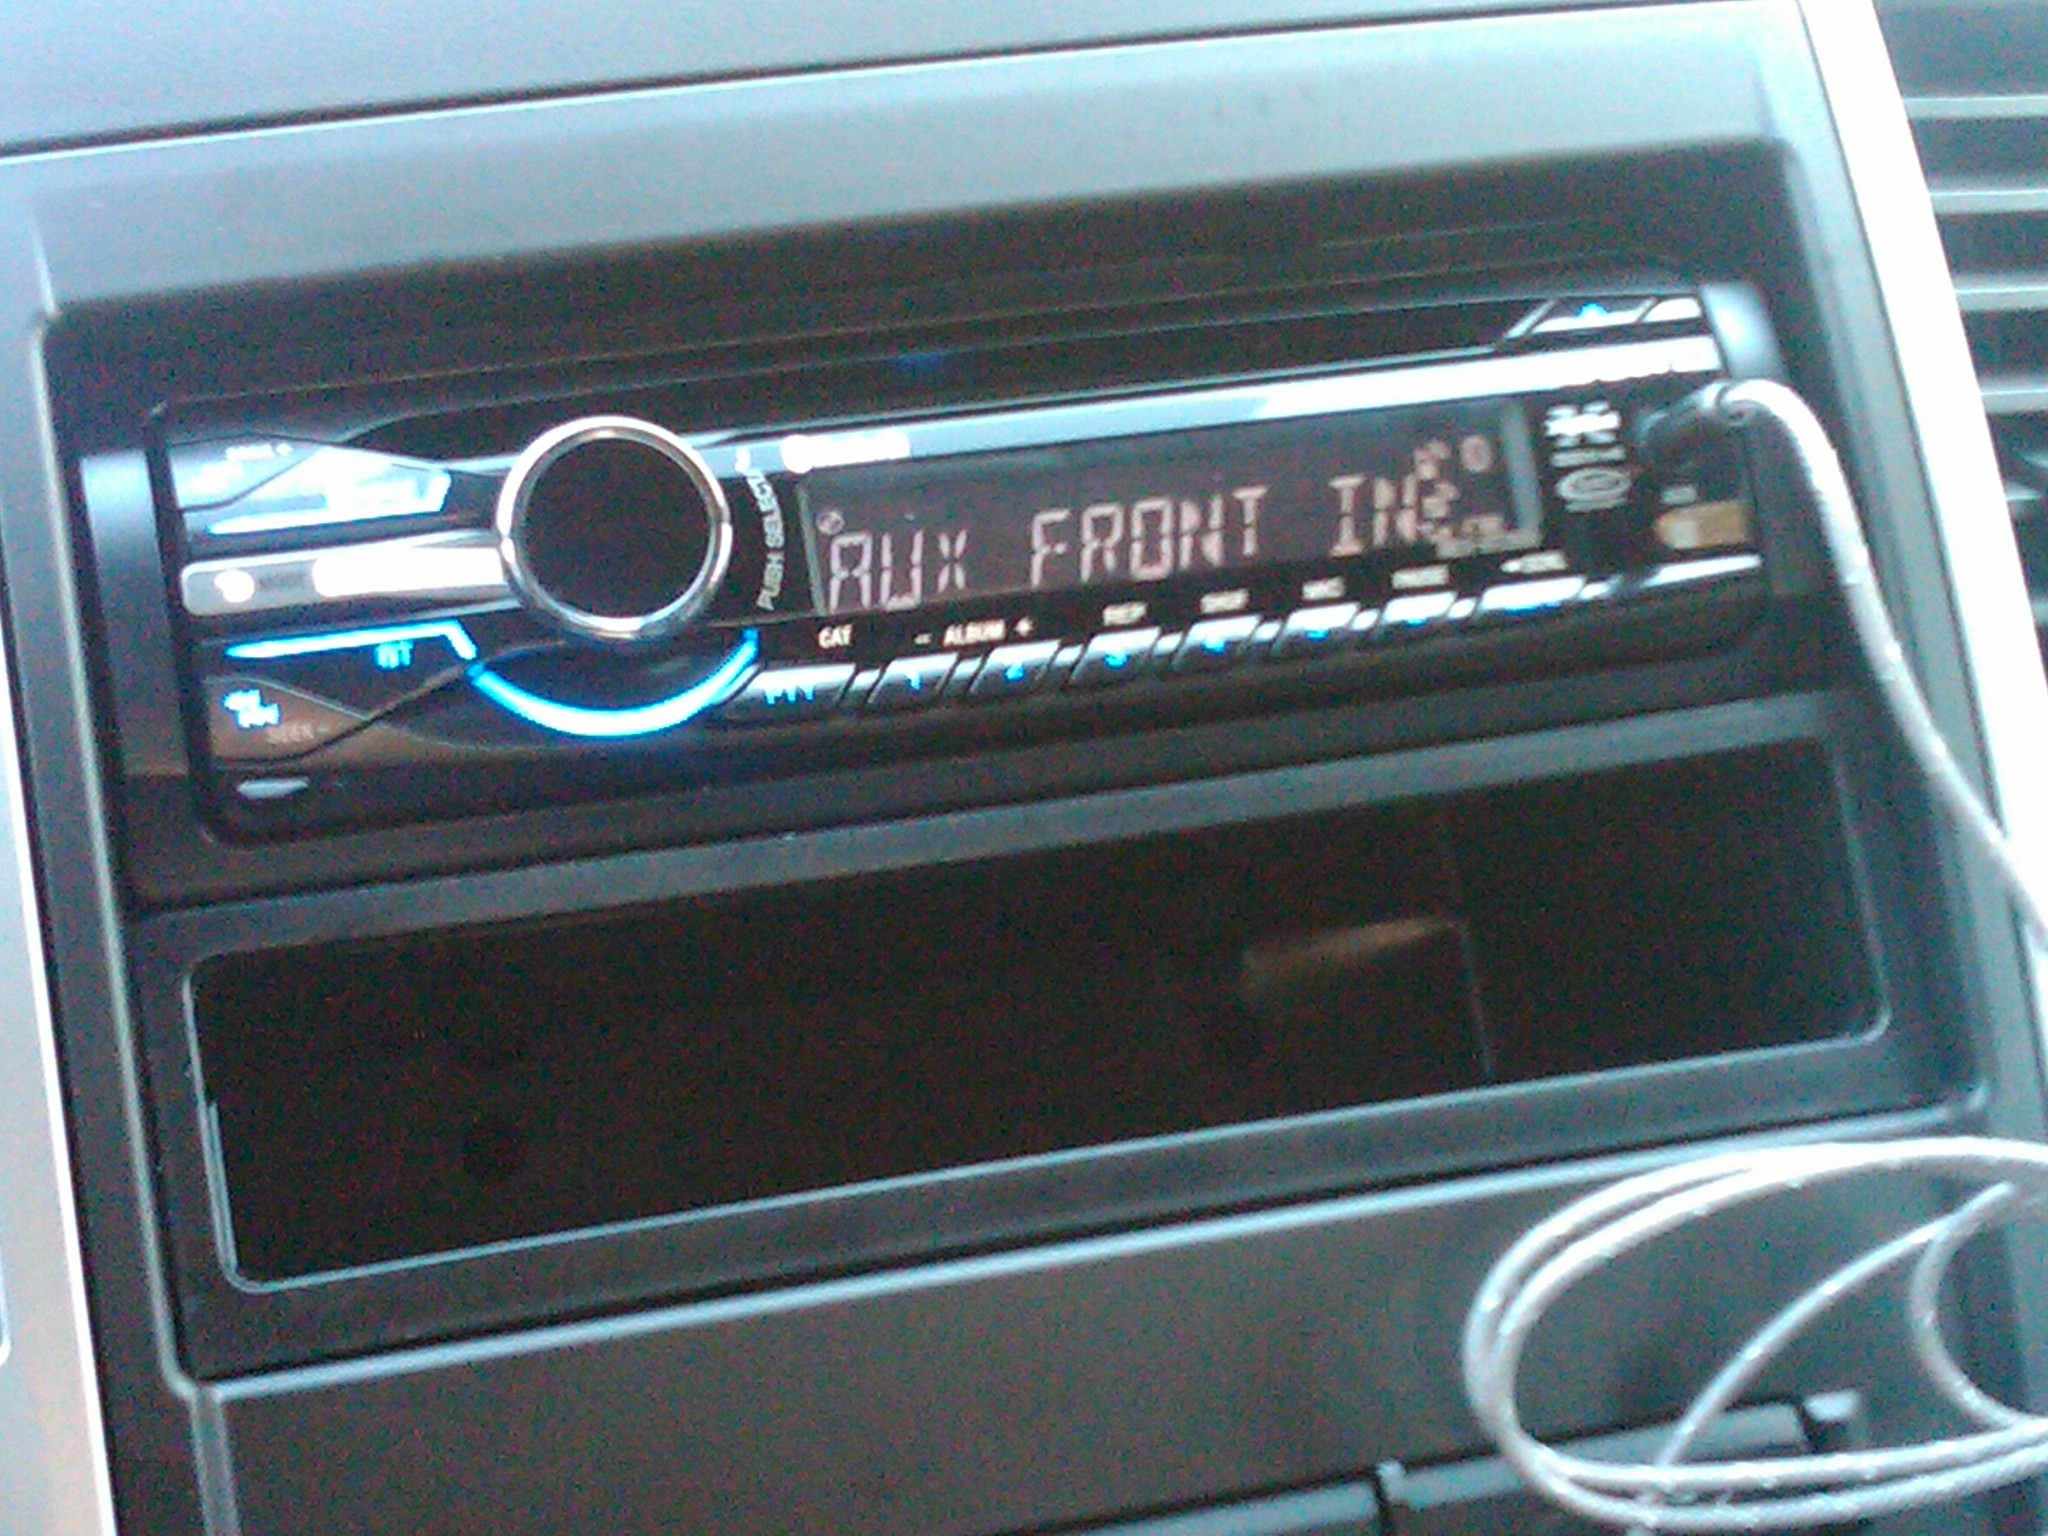 Nissan frontier auxiliary audio input jack #1